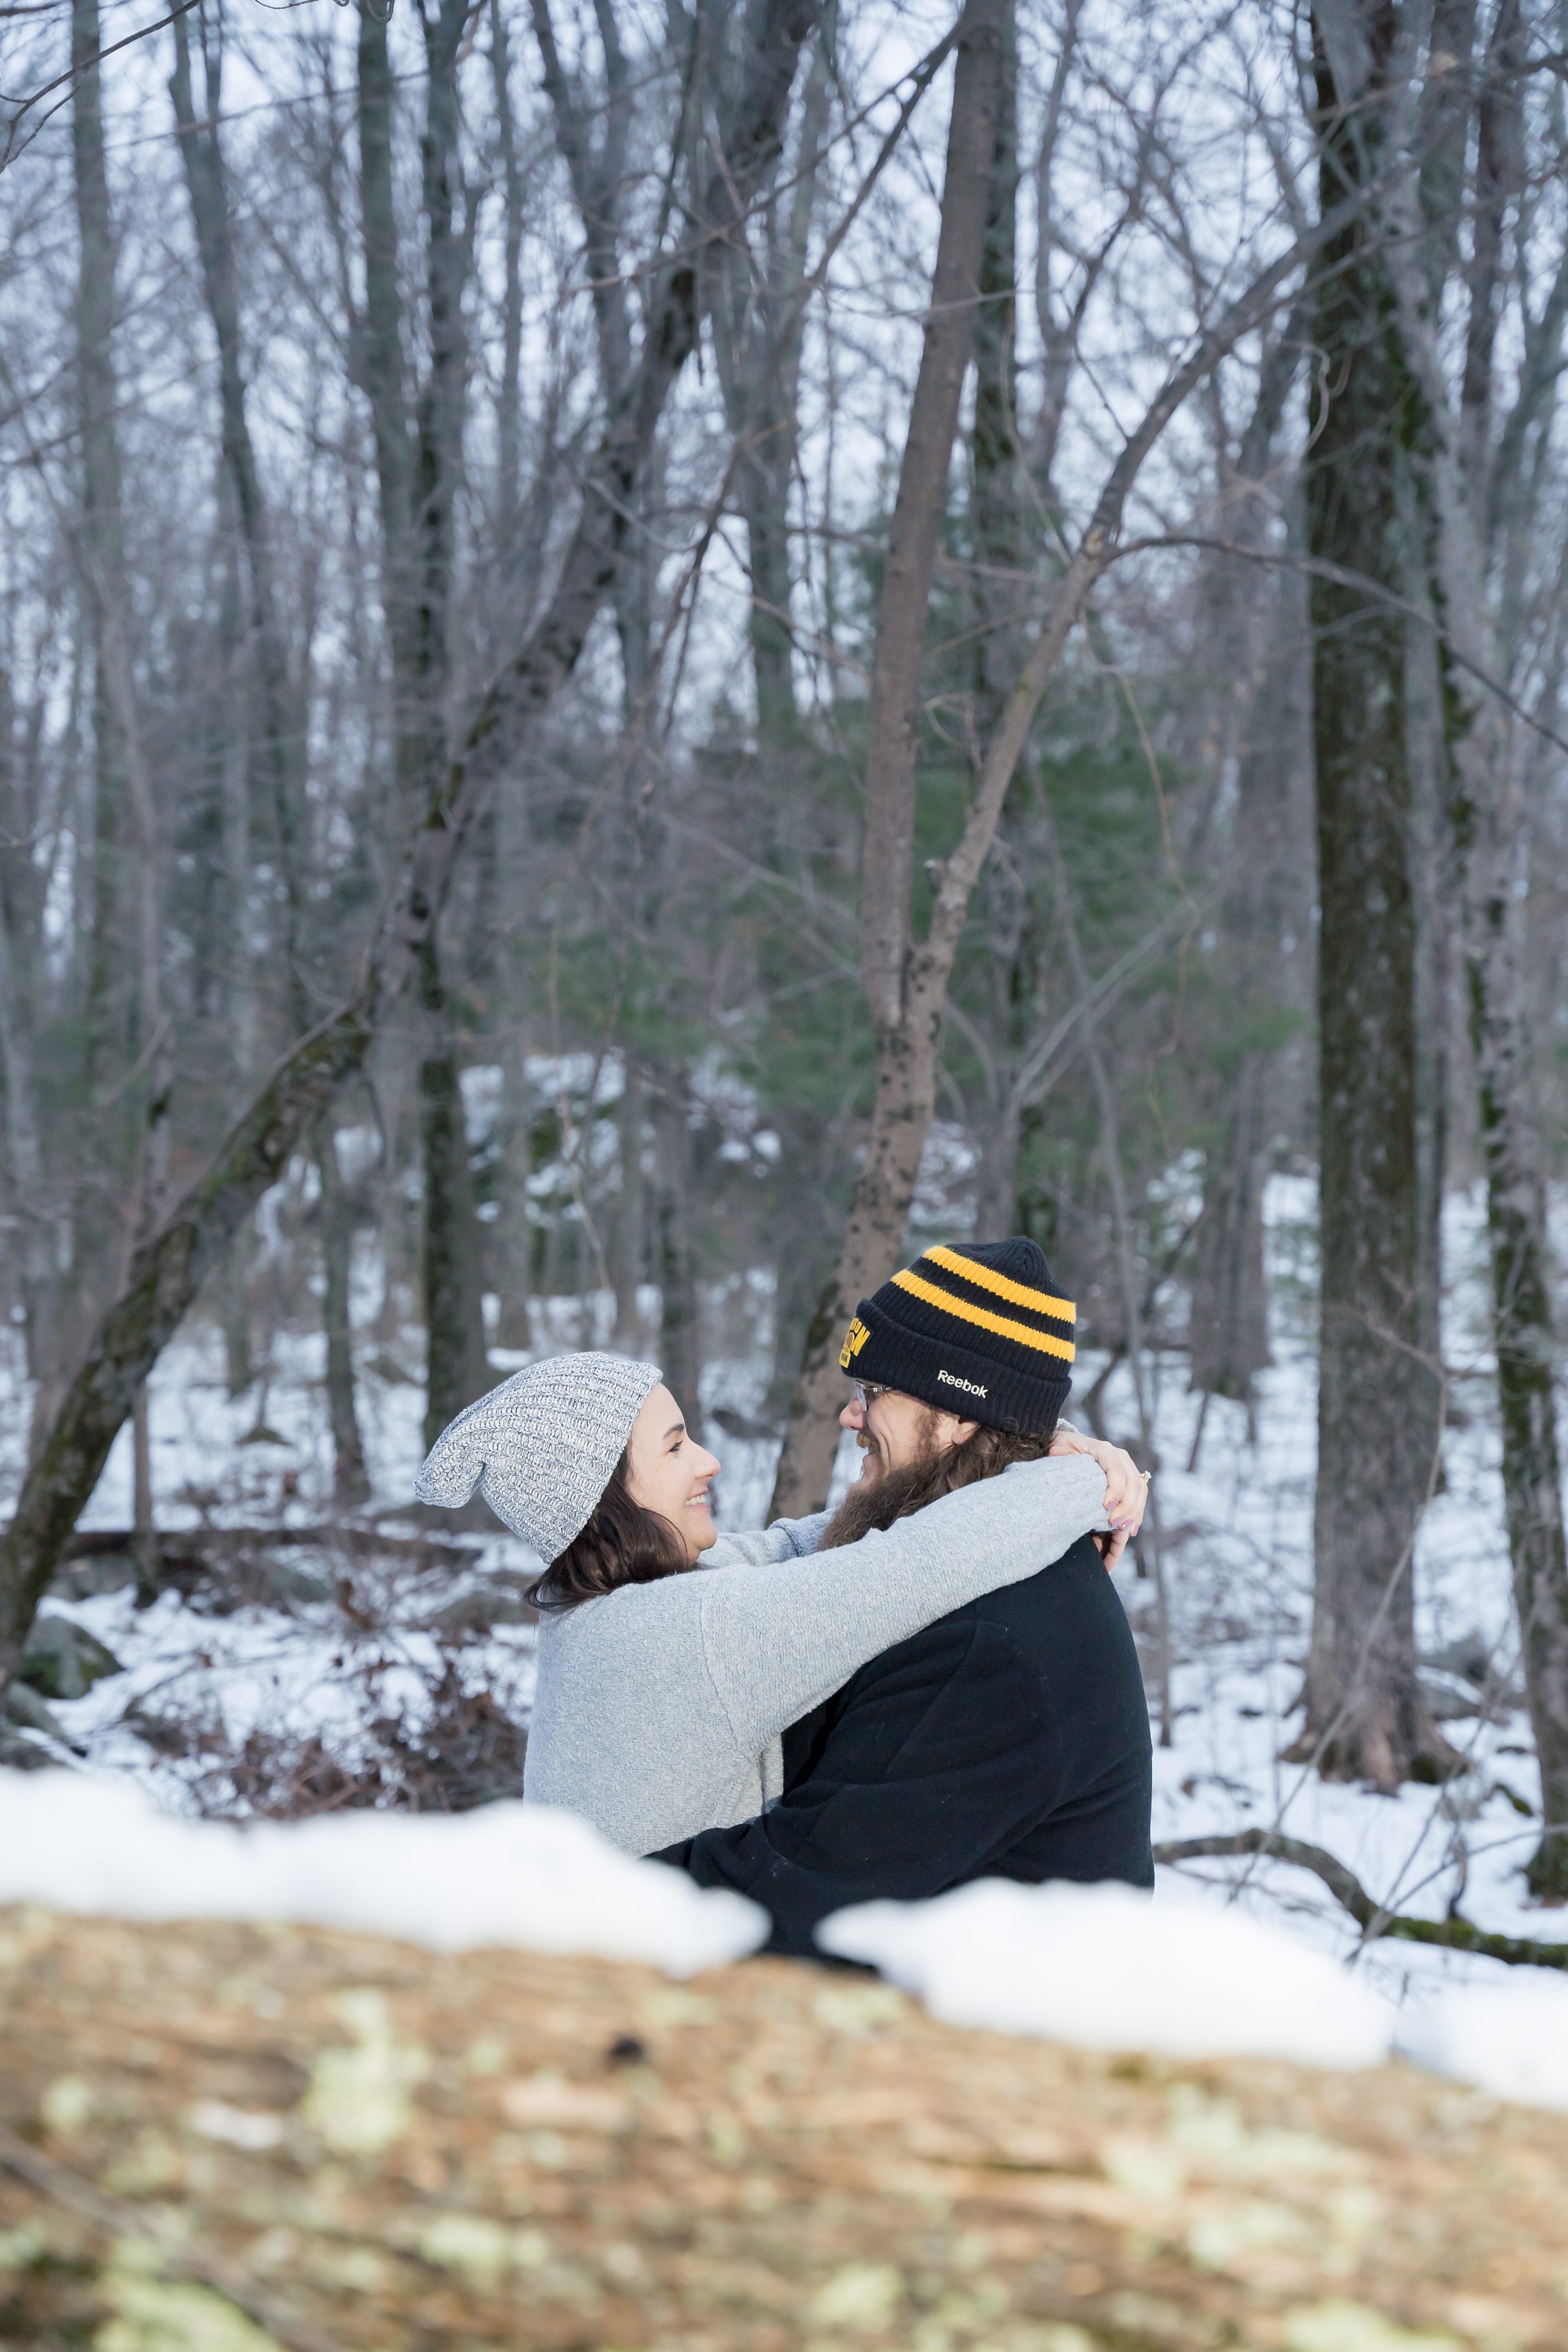 Rhode Island Wedding Photographer,Massachusetts Wedding Photographer,Engagement Session in the Snow,Woodsy Engagement Pictures,Engagement Session in the Woods